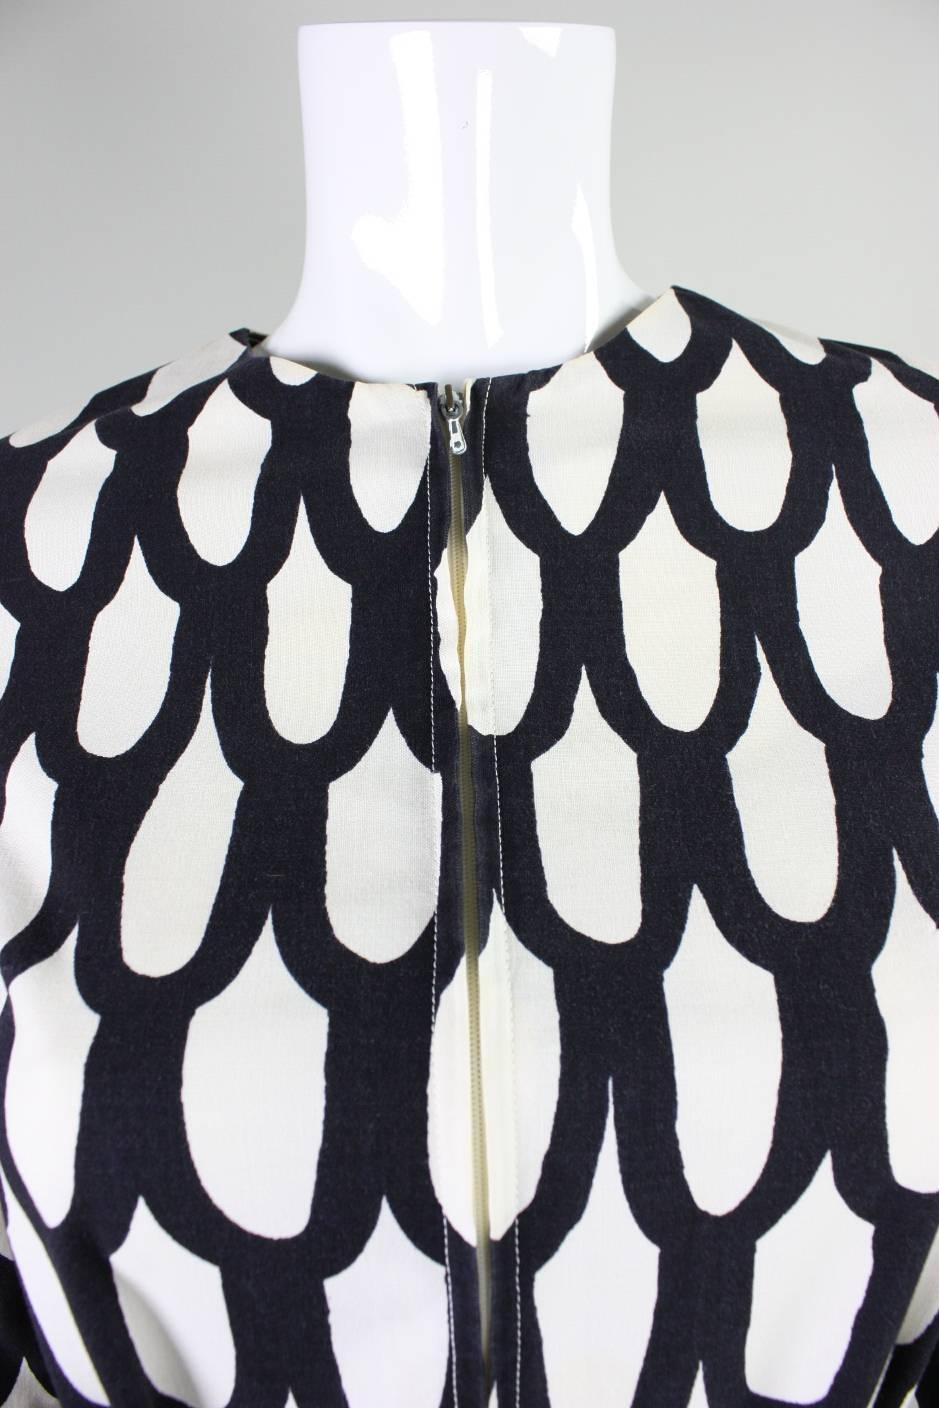 1965 Marimekko Black & White Printed Dress For Sale 2